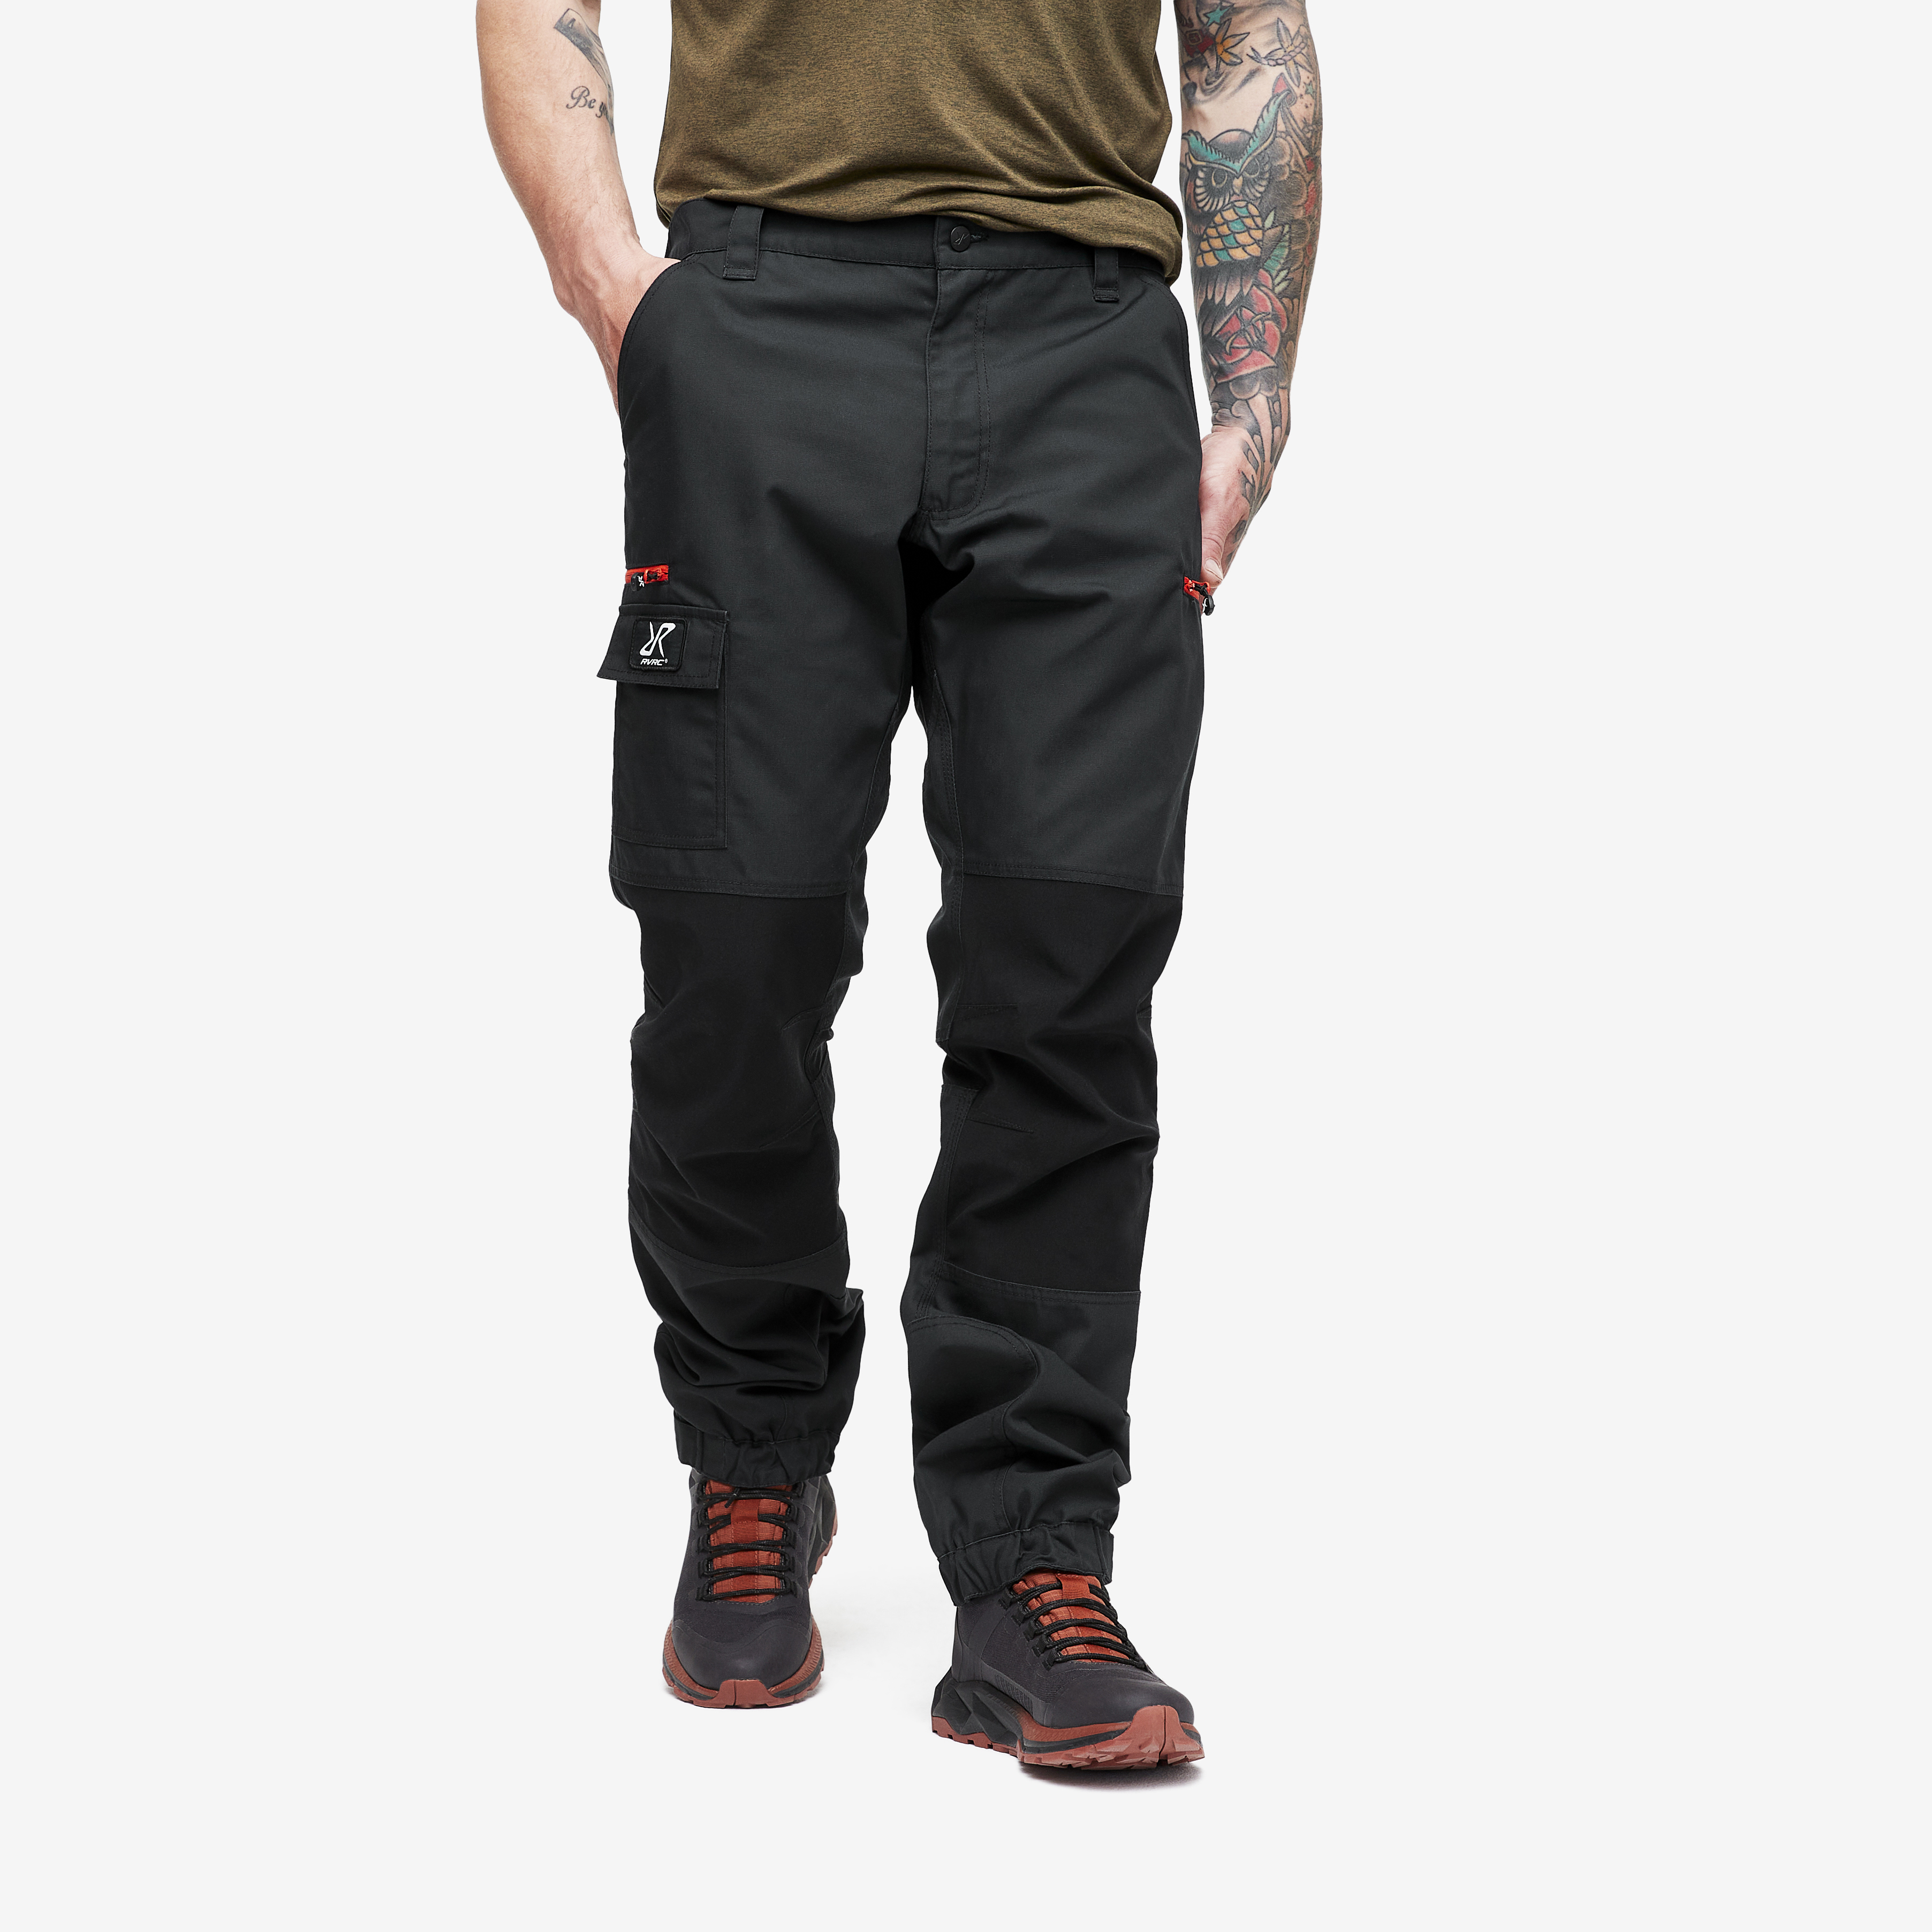 Nordwand Trousers Charcoal Black/Lava Men